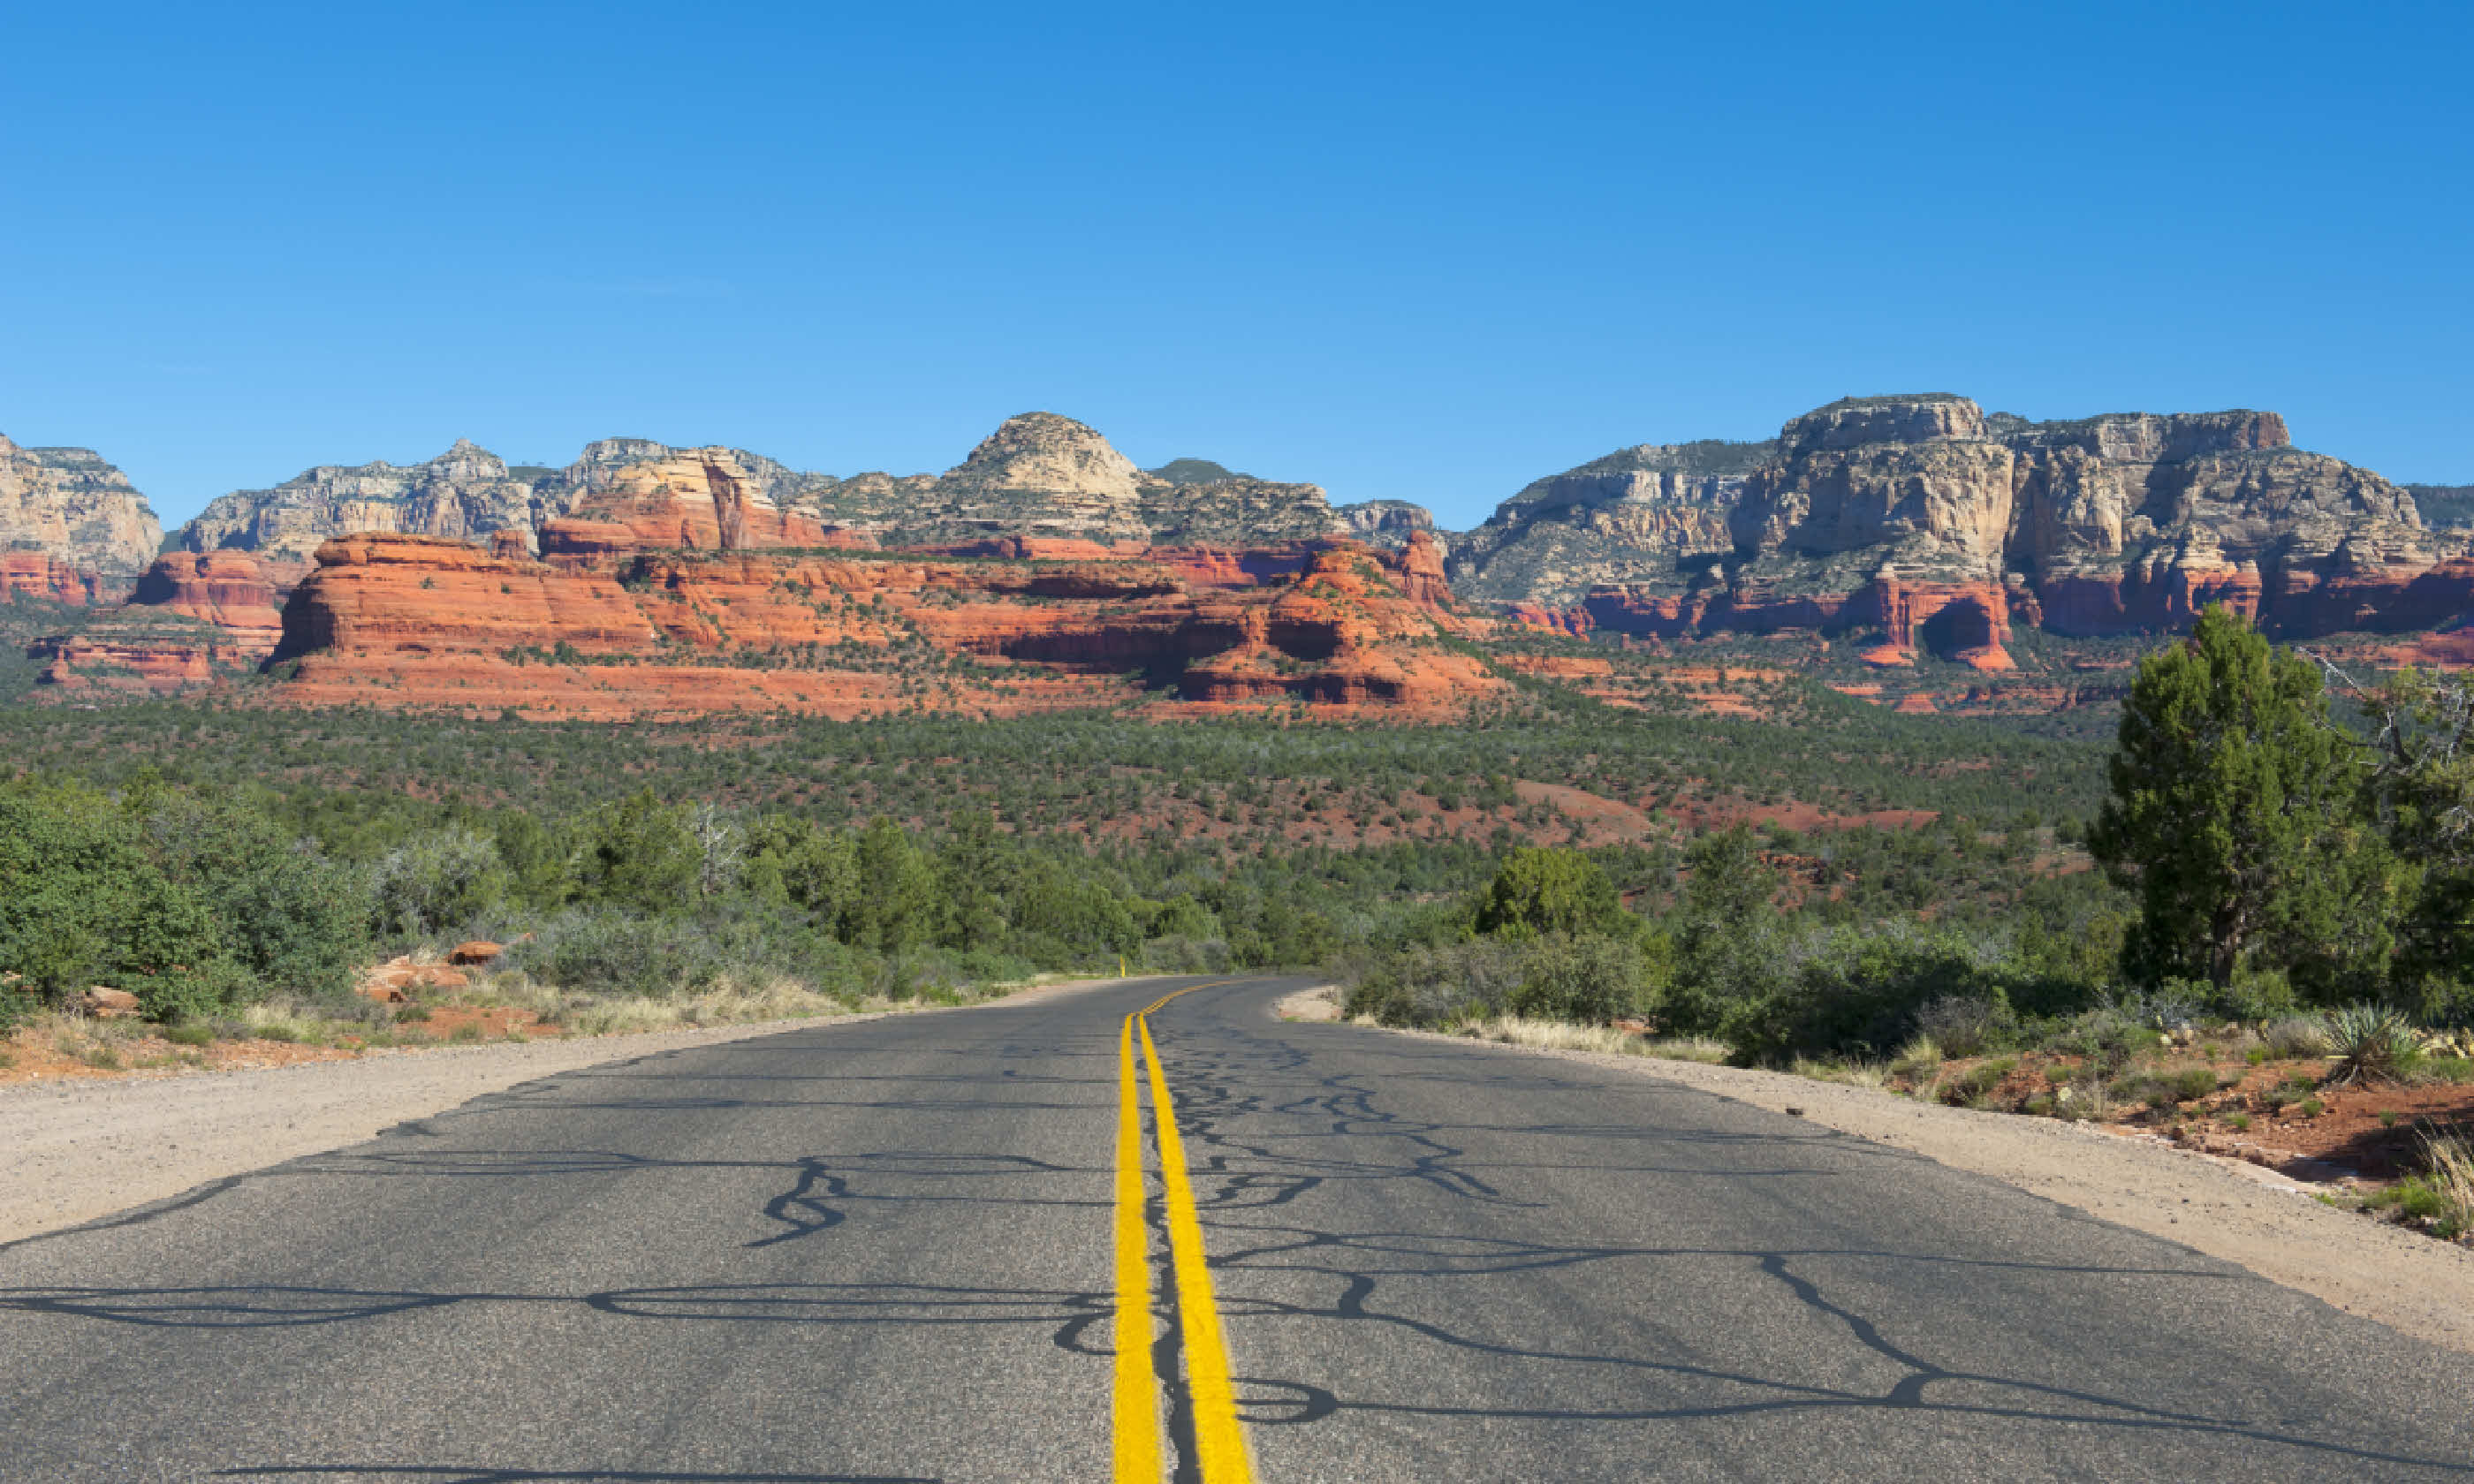 Road from Flagstaff to Sedona Arizona (Shutterstock)